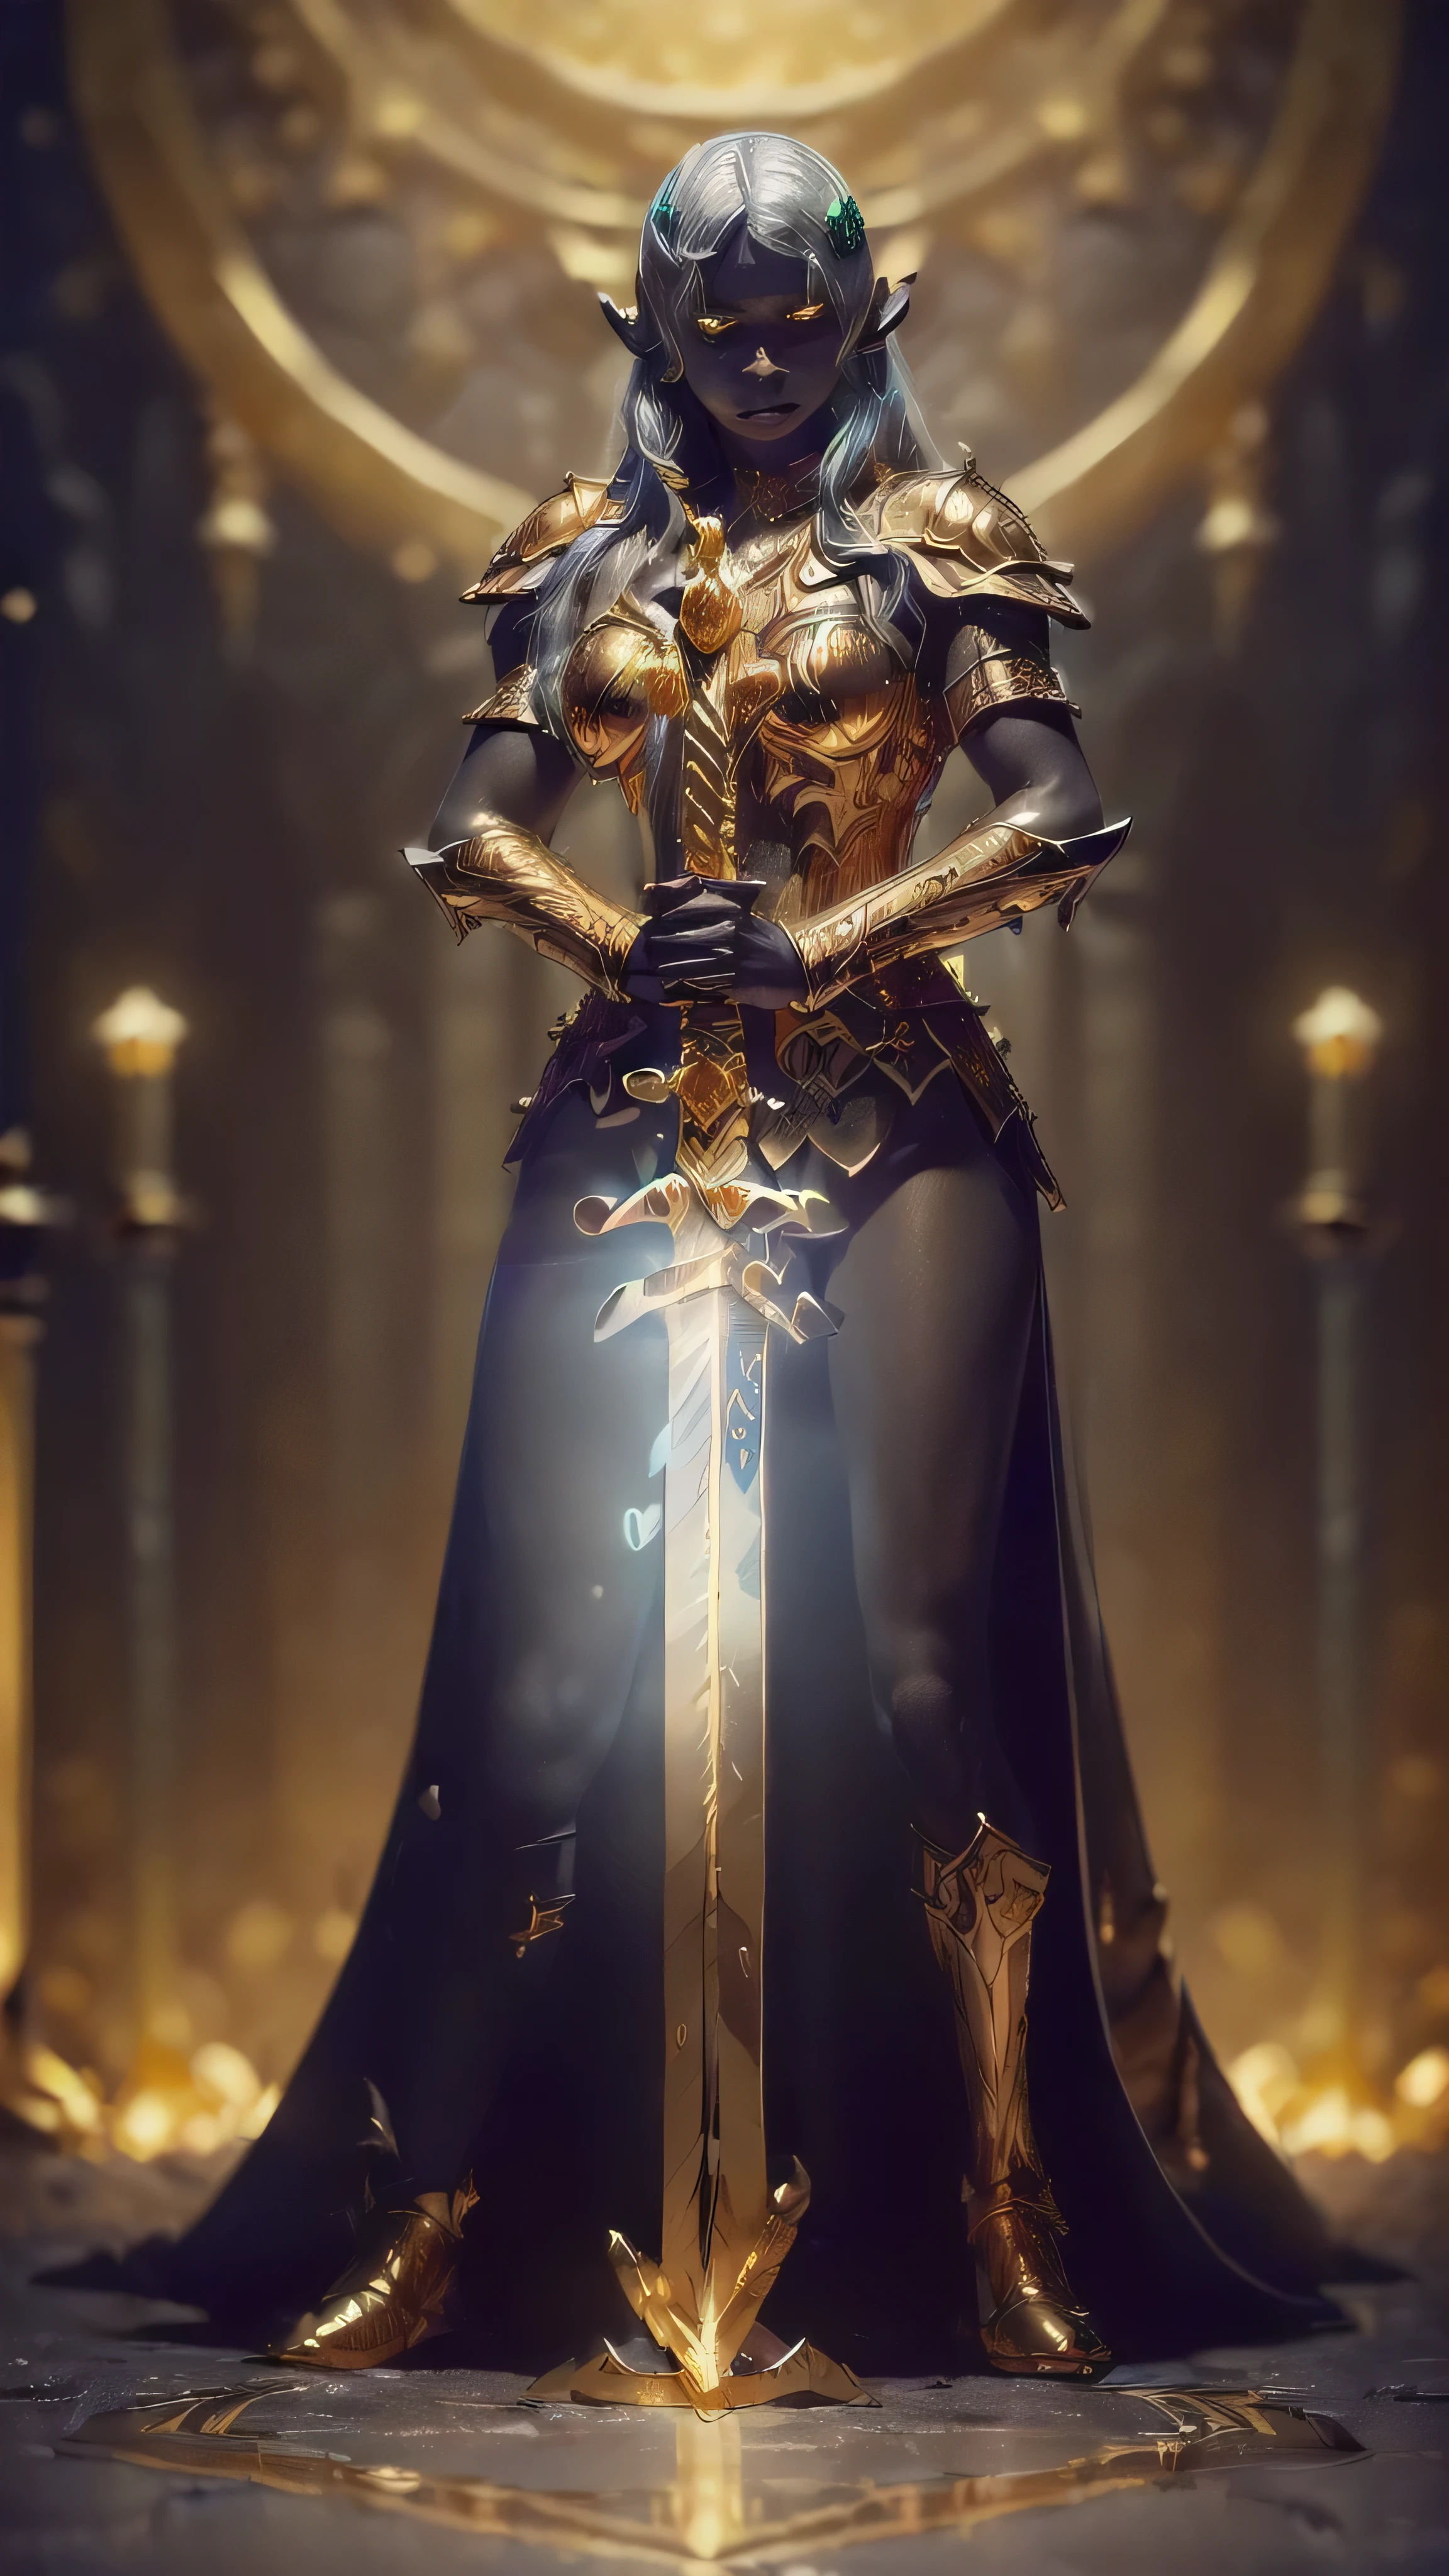 (masterpiece:0.8, best quality:1.5), intricate:1.3, (((((ONE gigantic golden sword, glowing, engraved)), underground shadow cavern, fujifilm, 8k, depth of field, bokeh))), kneeling paladin ((((drow)))) woman, medieval armor black chrome